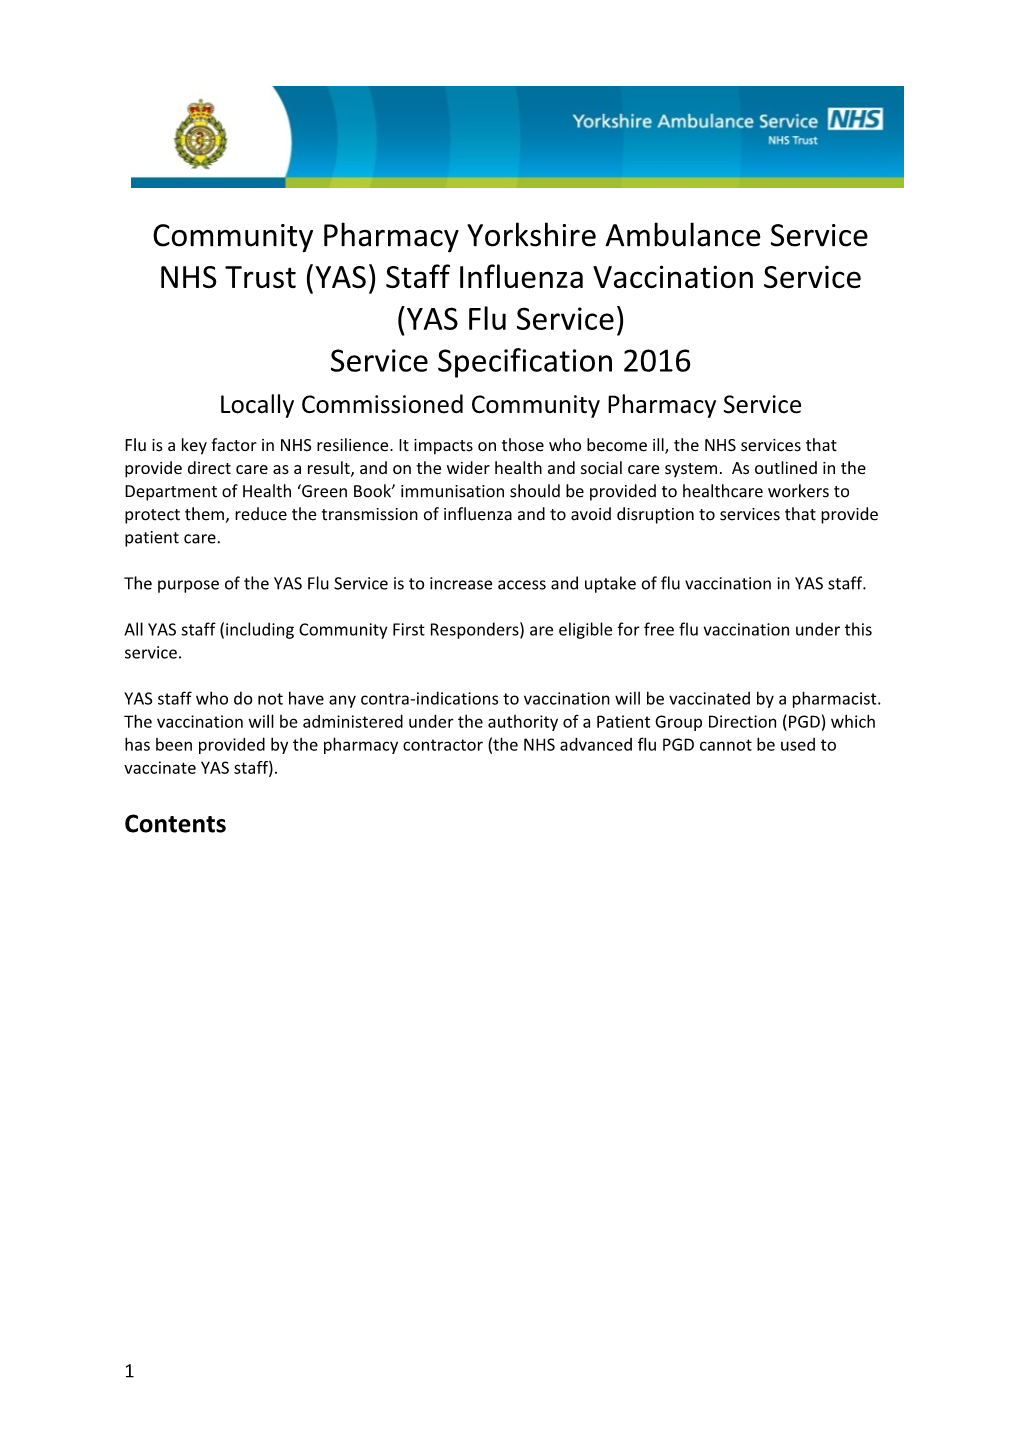 Community Pharmacy Yorkshire Ambulance Service NHS Trust (YAS) Staff Influenza Vaccination